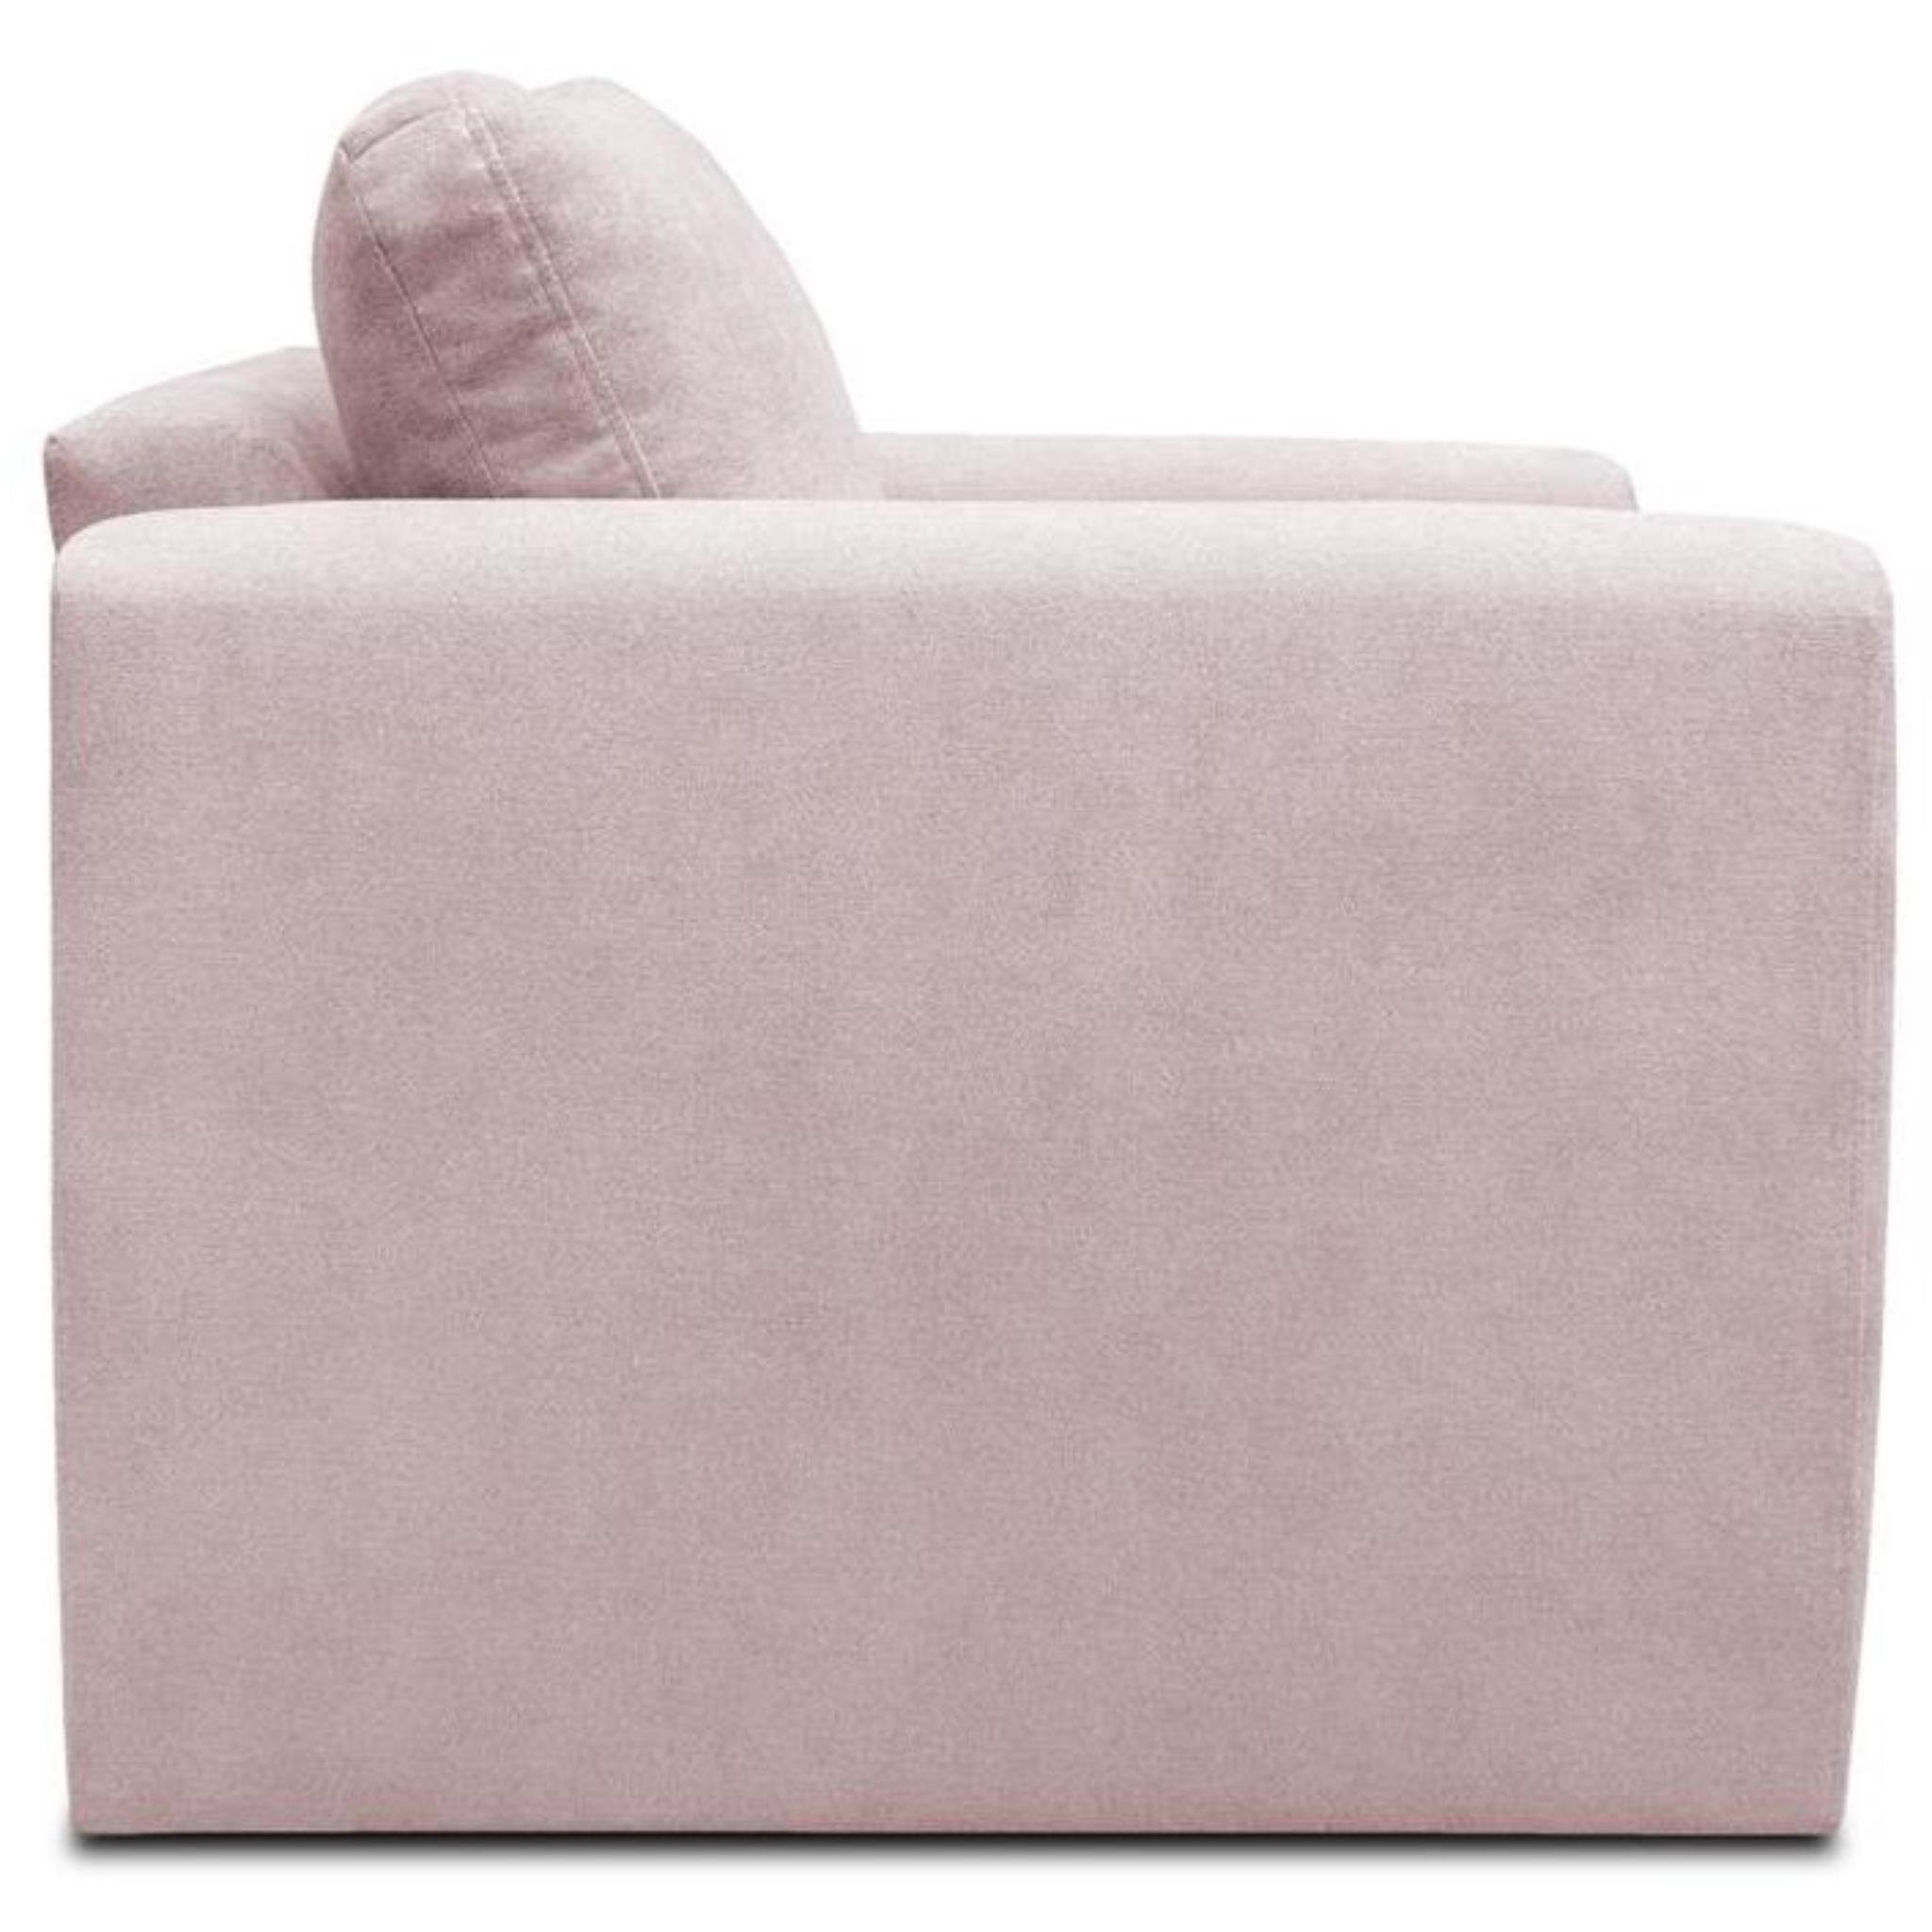 Beautysofa Relaxsessel 1-Sitzer 02) Polstersessel Rosa (Modern Sofa, mit Kamel Wohnzimmersessel), Bettkasten, Schlaffunktion, (alfa